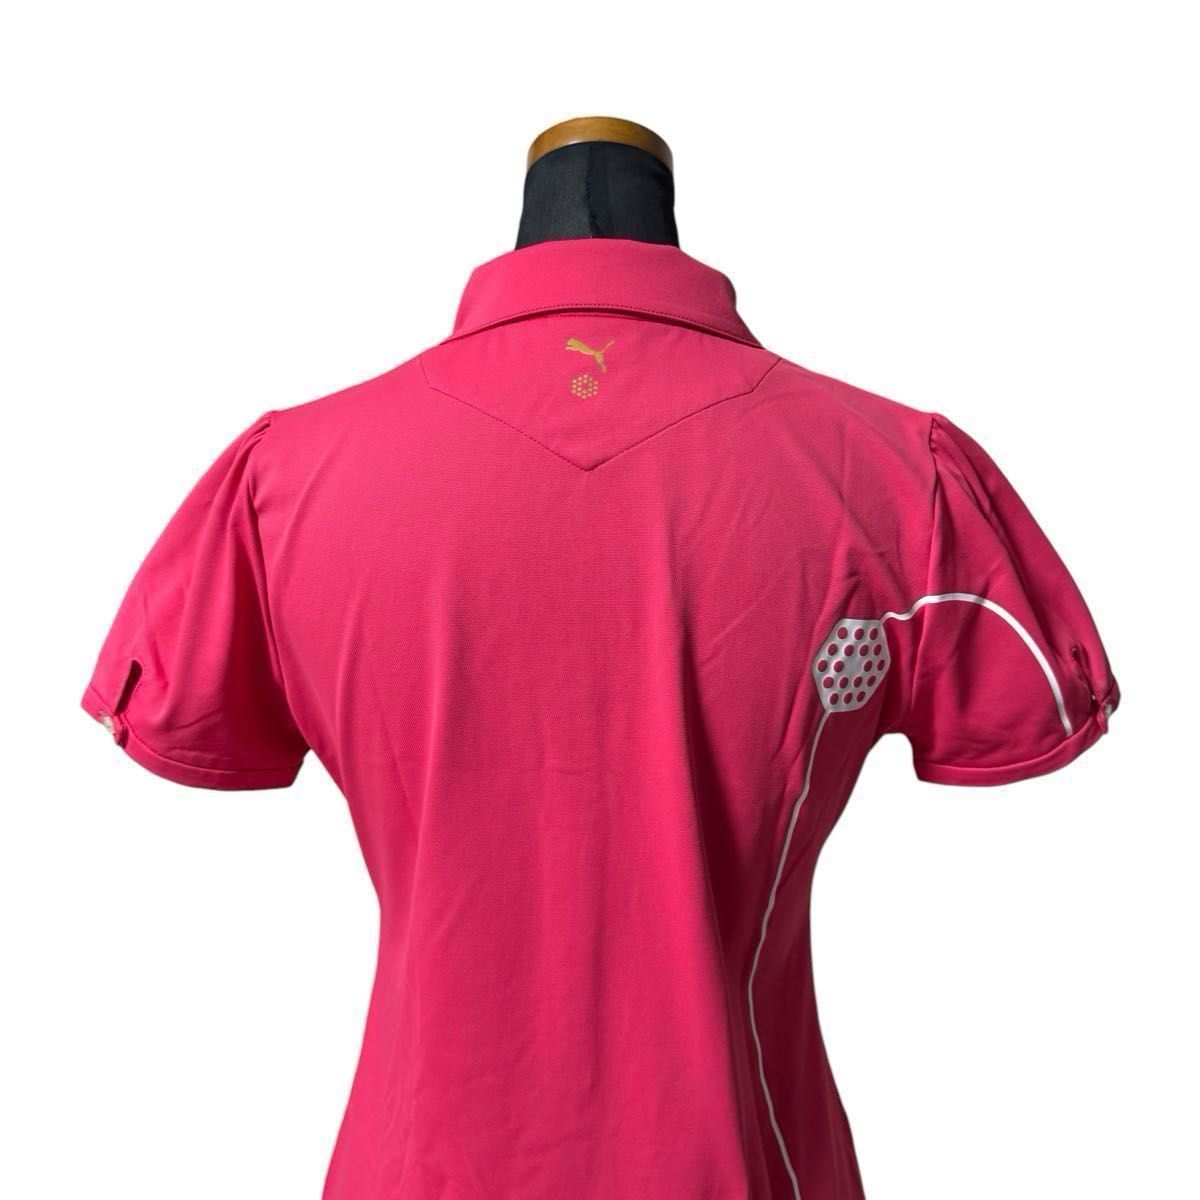 Puma プーマ ゴルフワンピース サイズM ピンク ワンポイントロゴ ポリエステル素材 ストレッチ ゴルフウェア